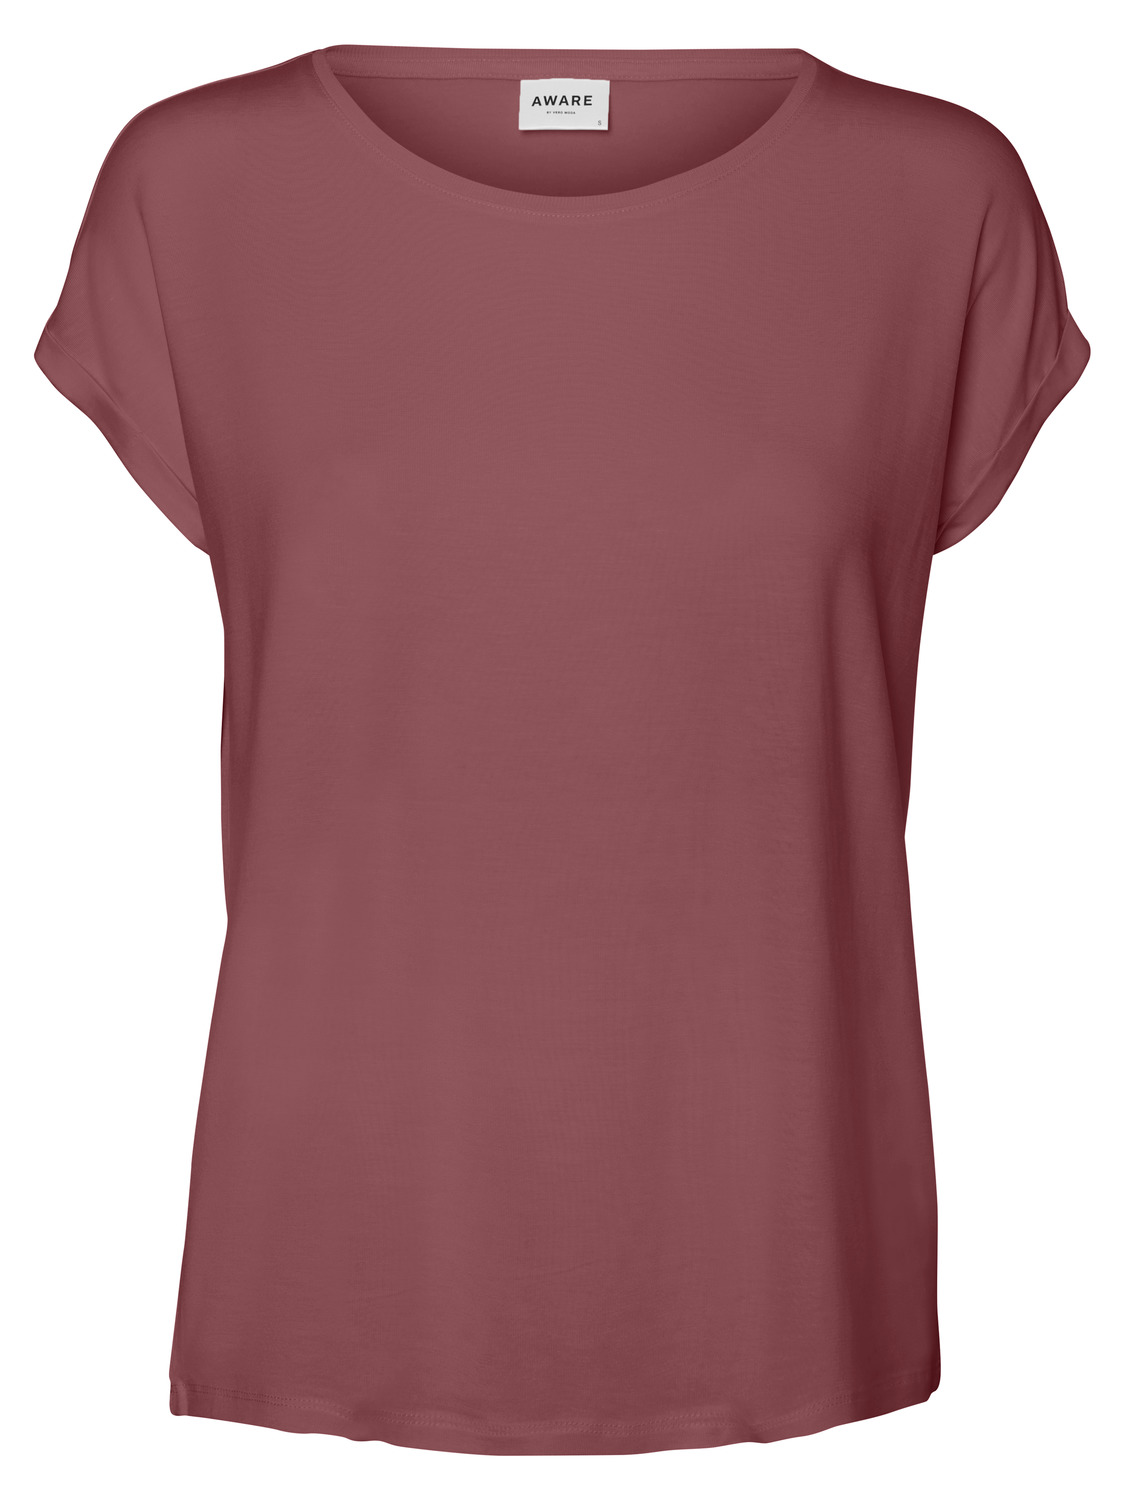 AWARE | Ava T-Shirt, ROSE BROWN, large